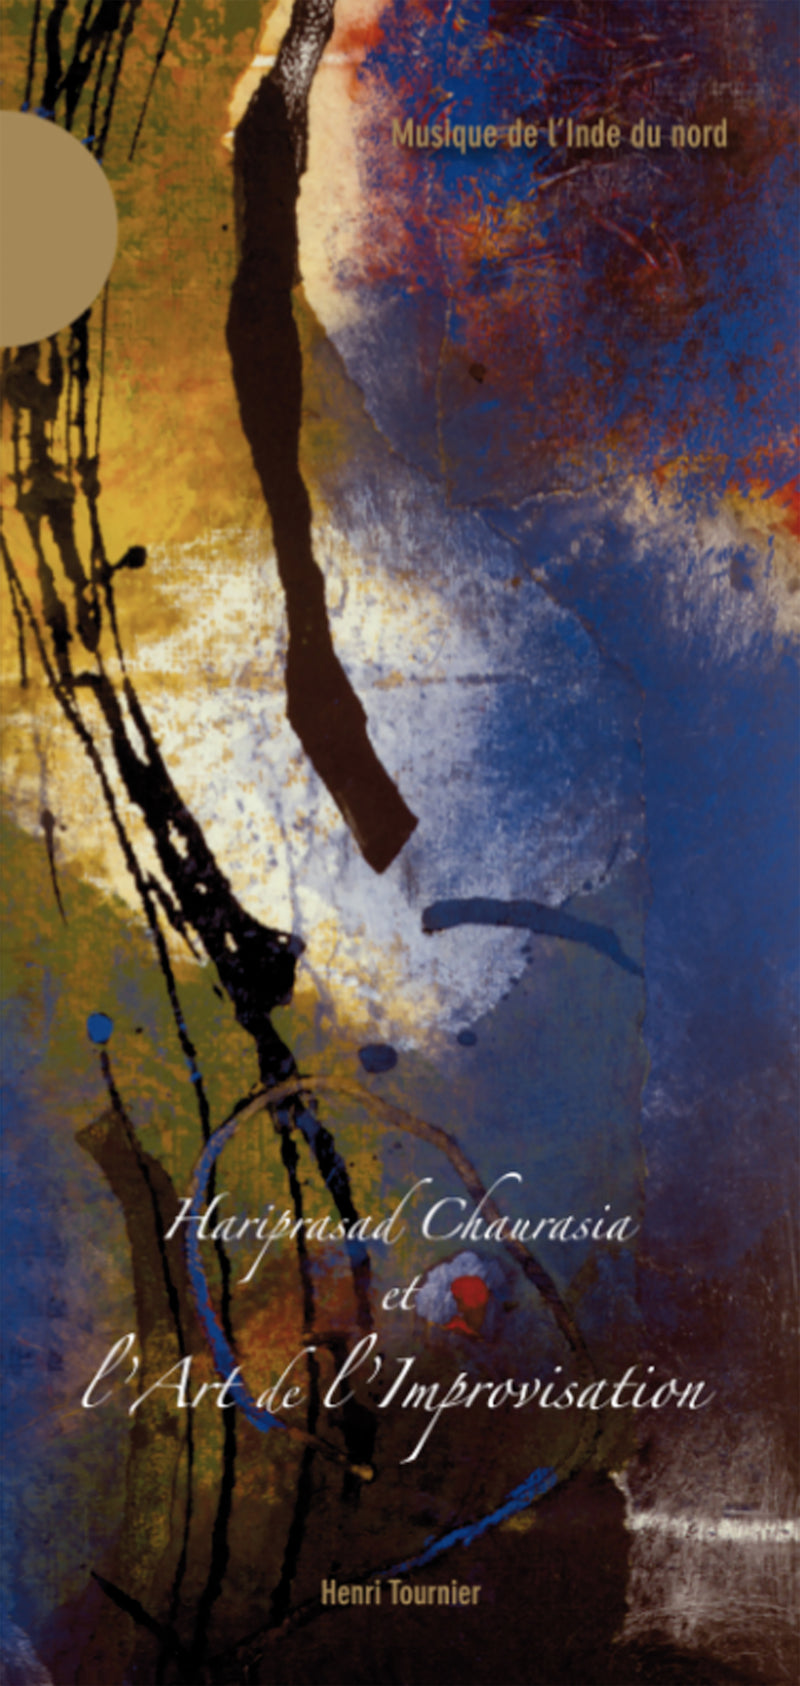 Hariprasad Chaurasia - L'art De L'improvisation French Version (CD)